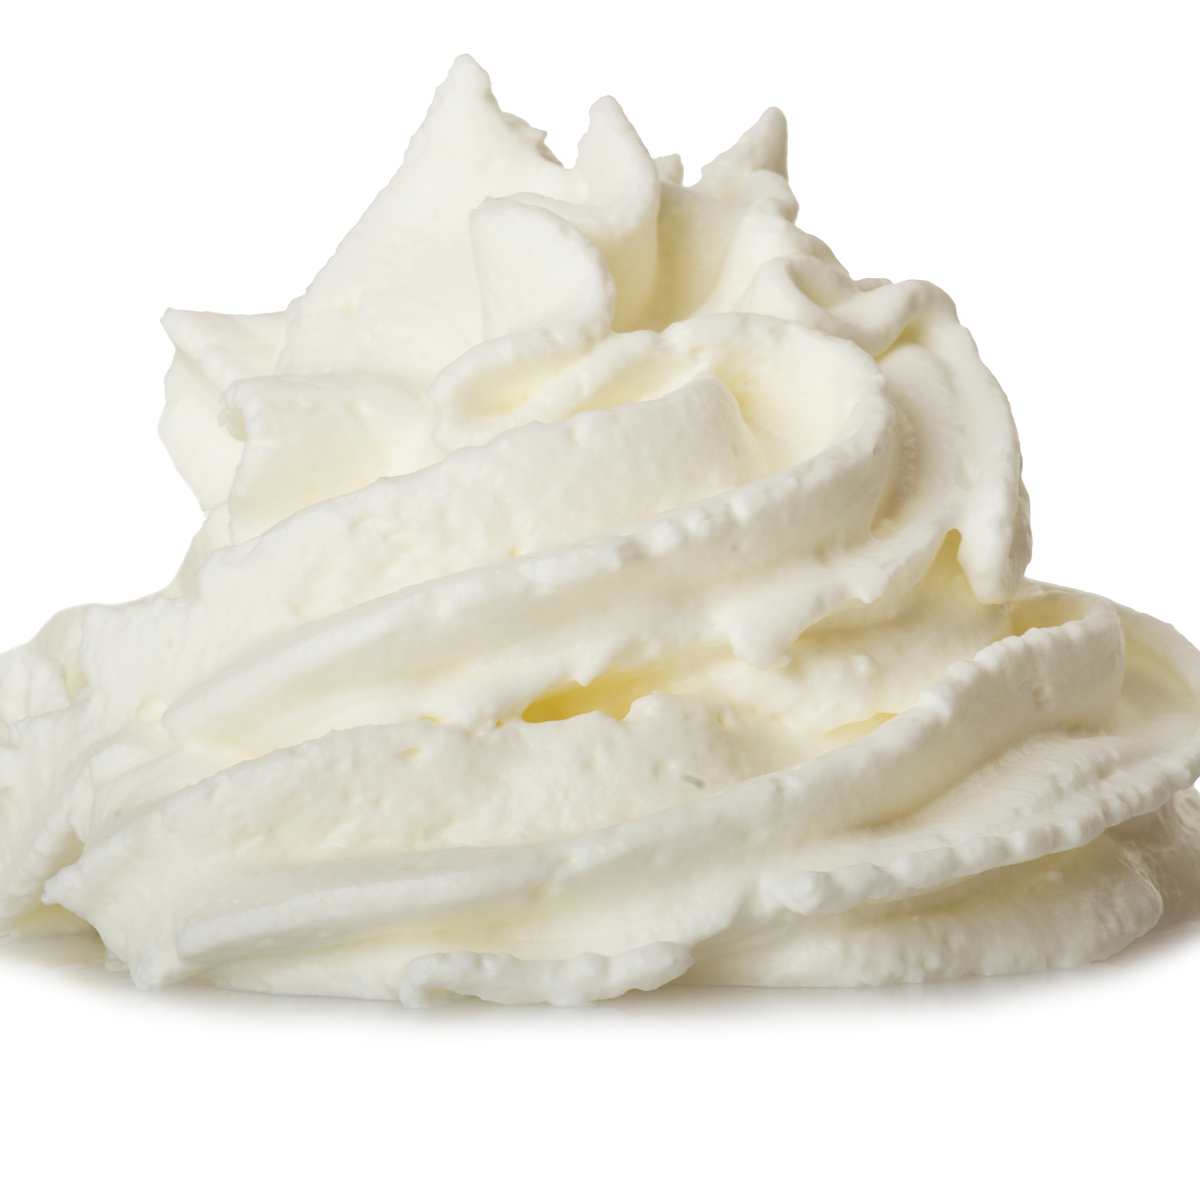 Whipped cream swirled on a white background.